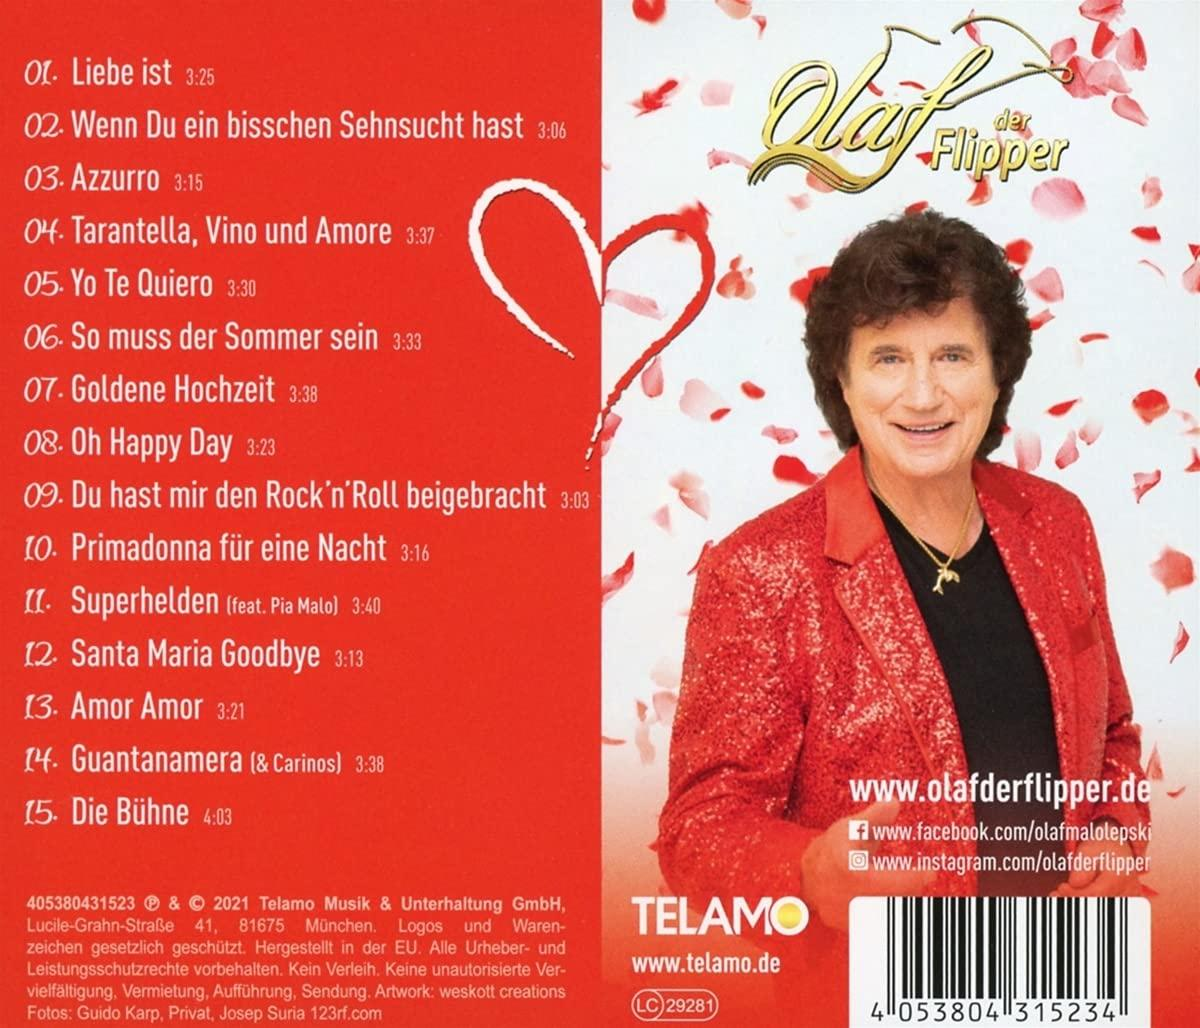 Olaf (CD) - ist Der Flipper - Liebe